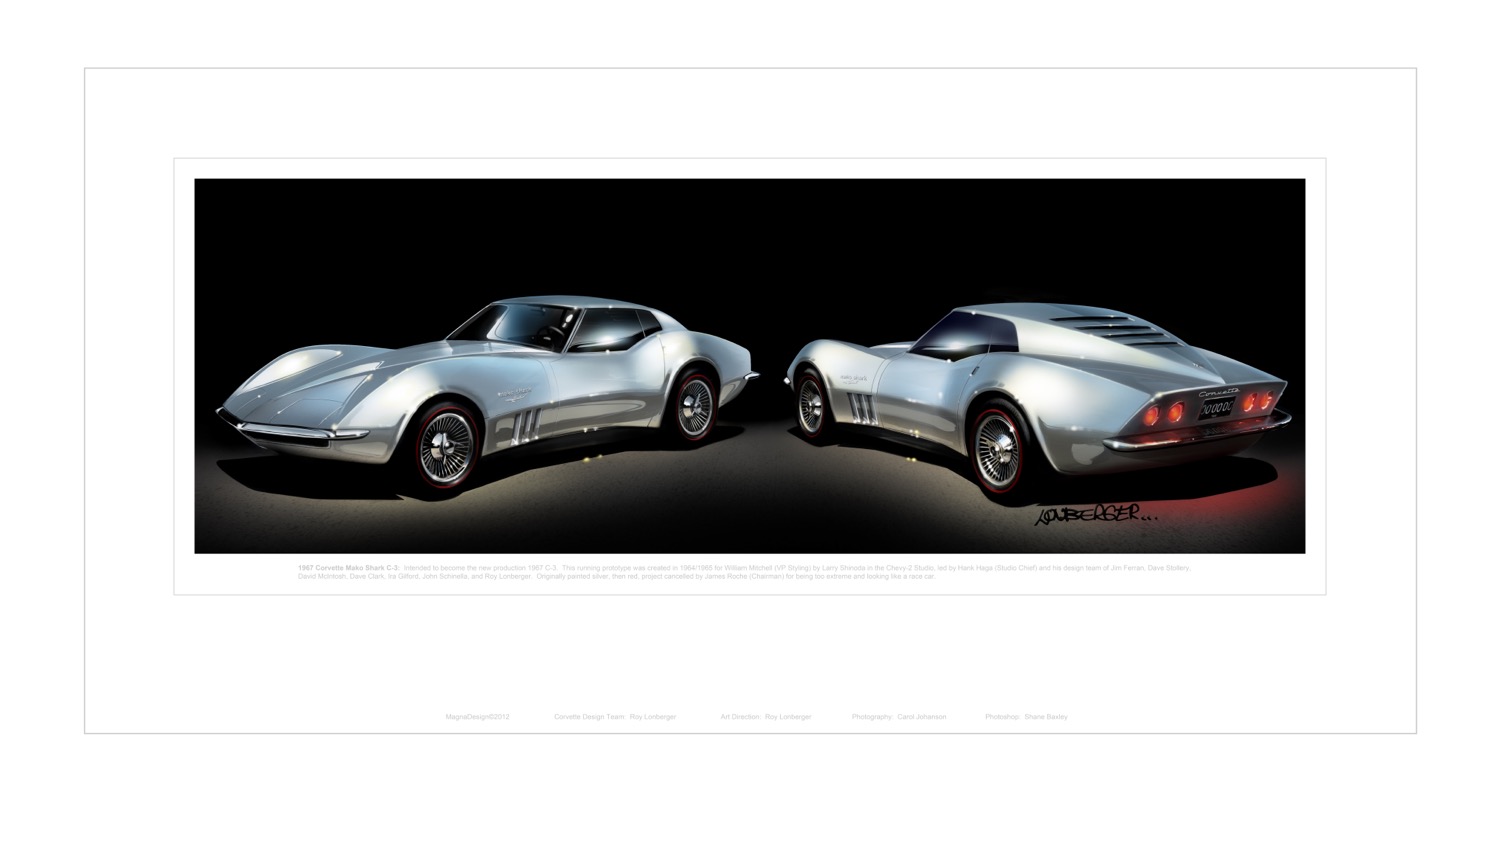 8-Corvette Mako Shark-1967-C-3-Silver-Wall Poster-LowRez.jpg